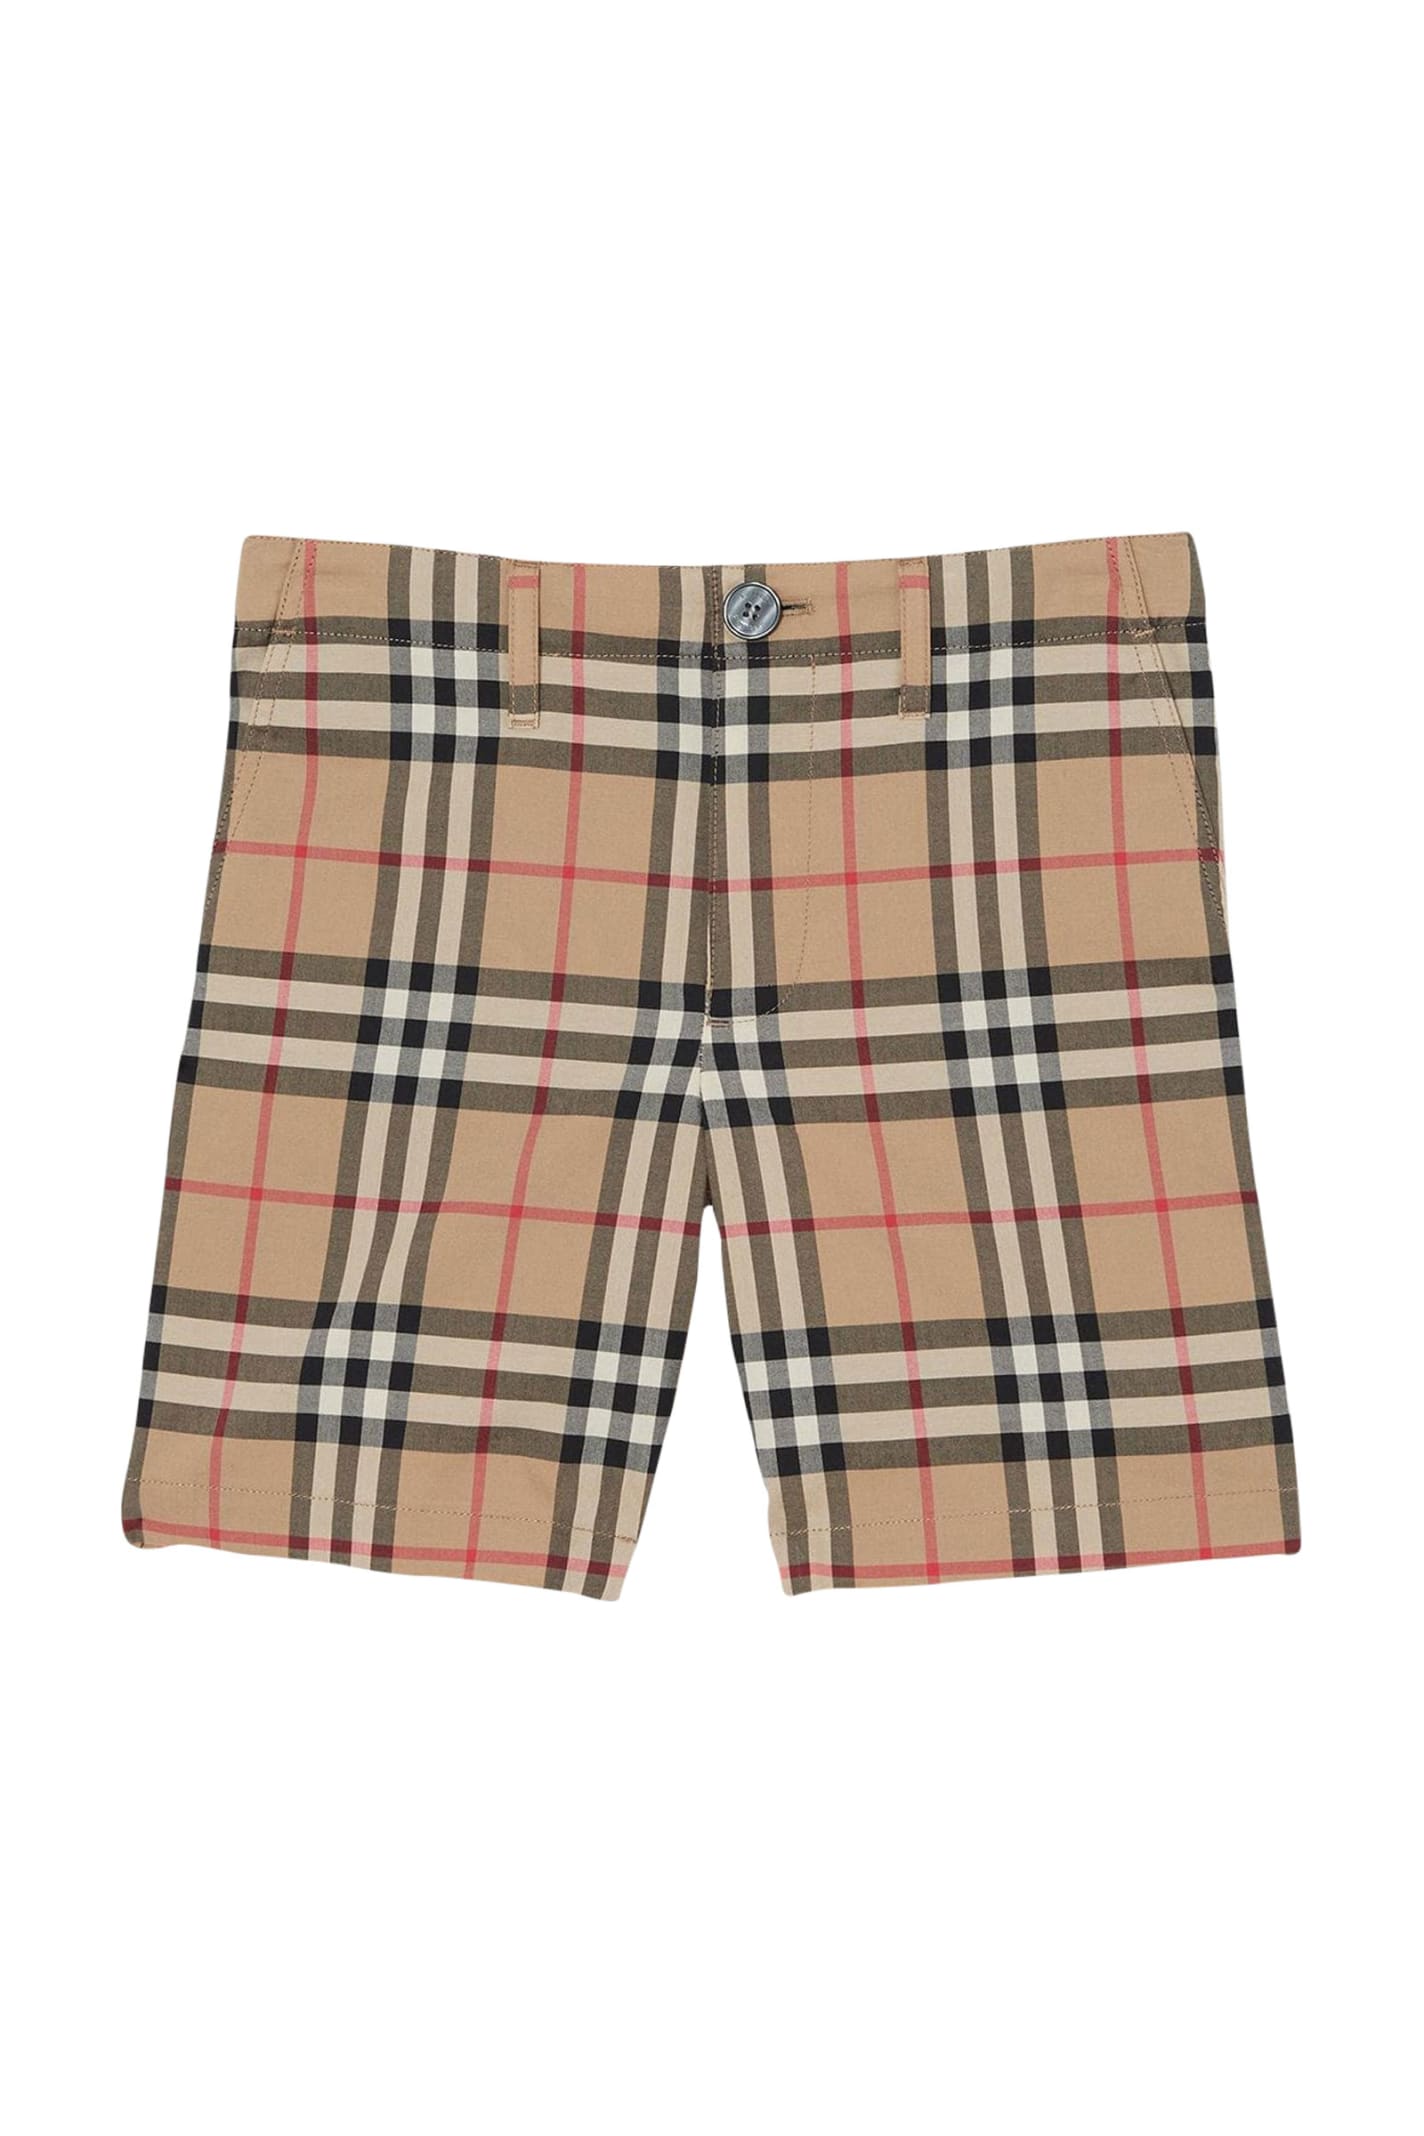 burberry shorts kids price